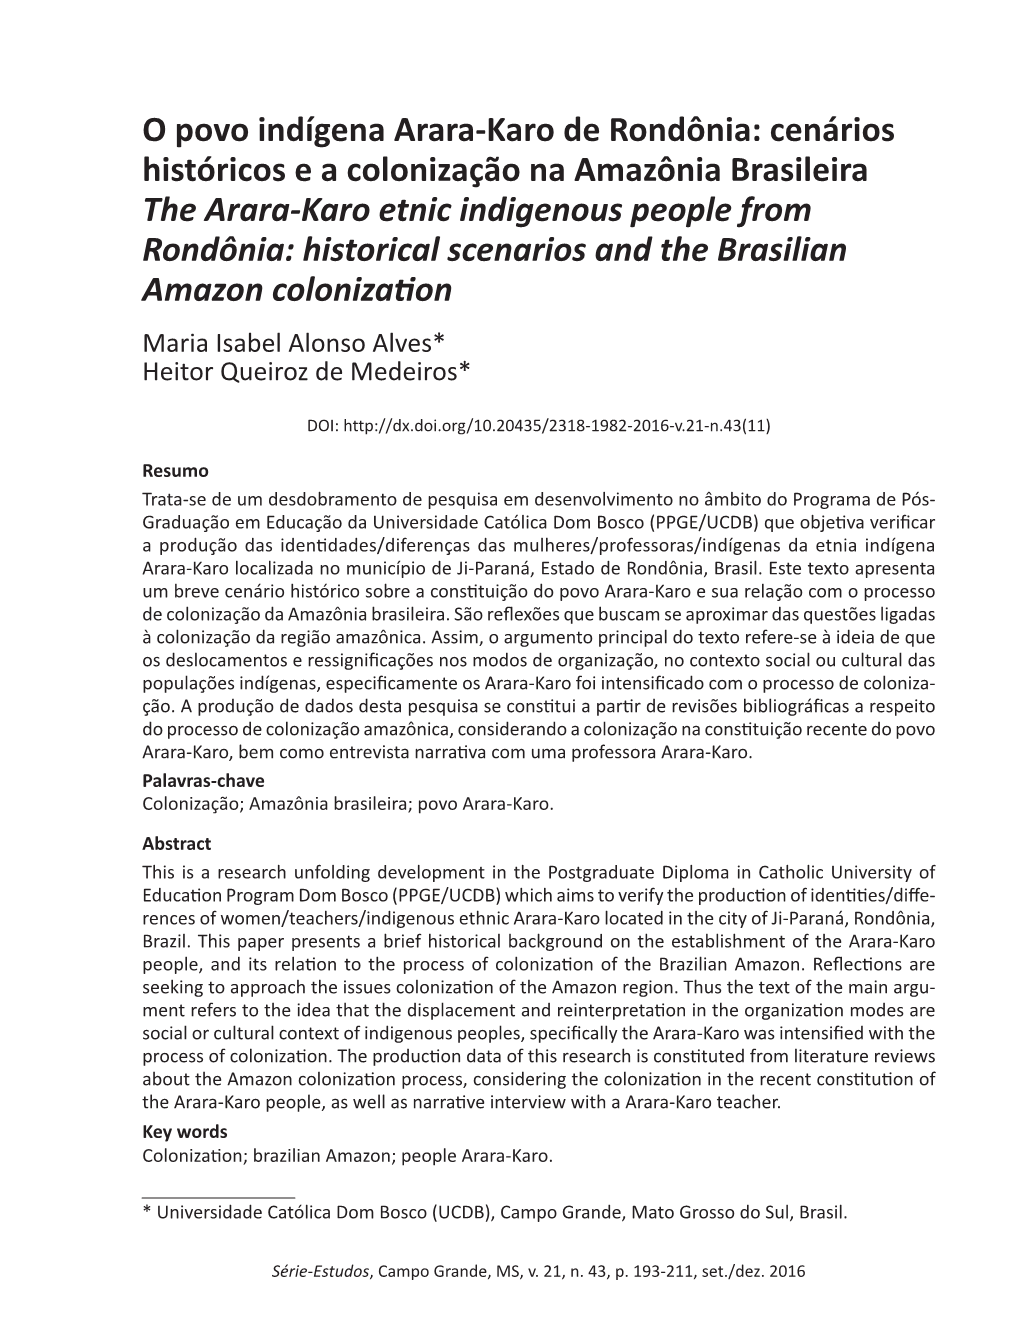 O Povo Indígena Arara-Karo De Rondônia